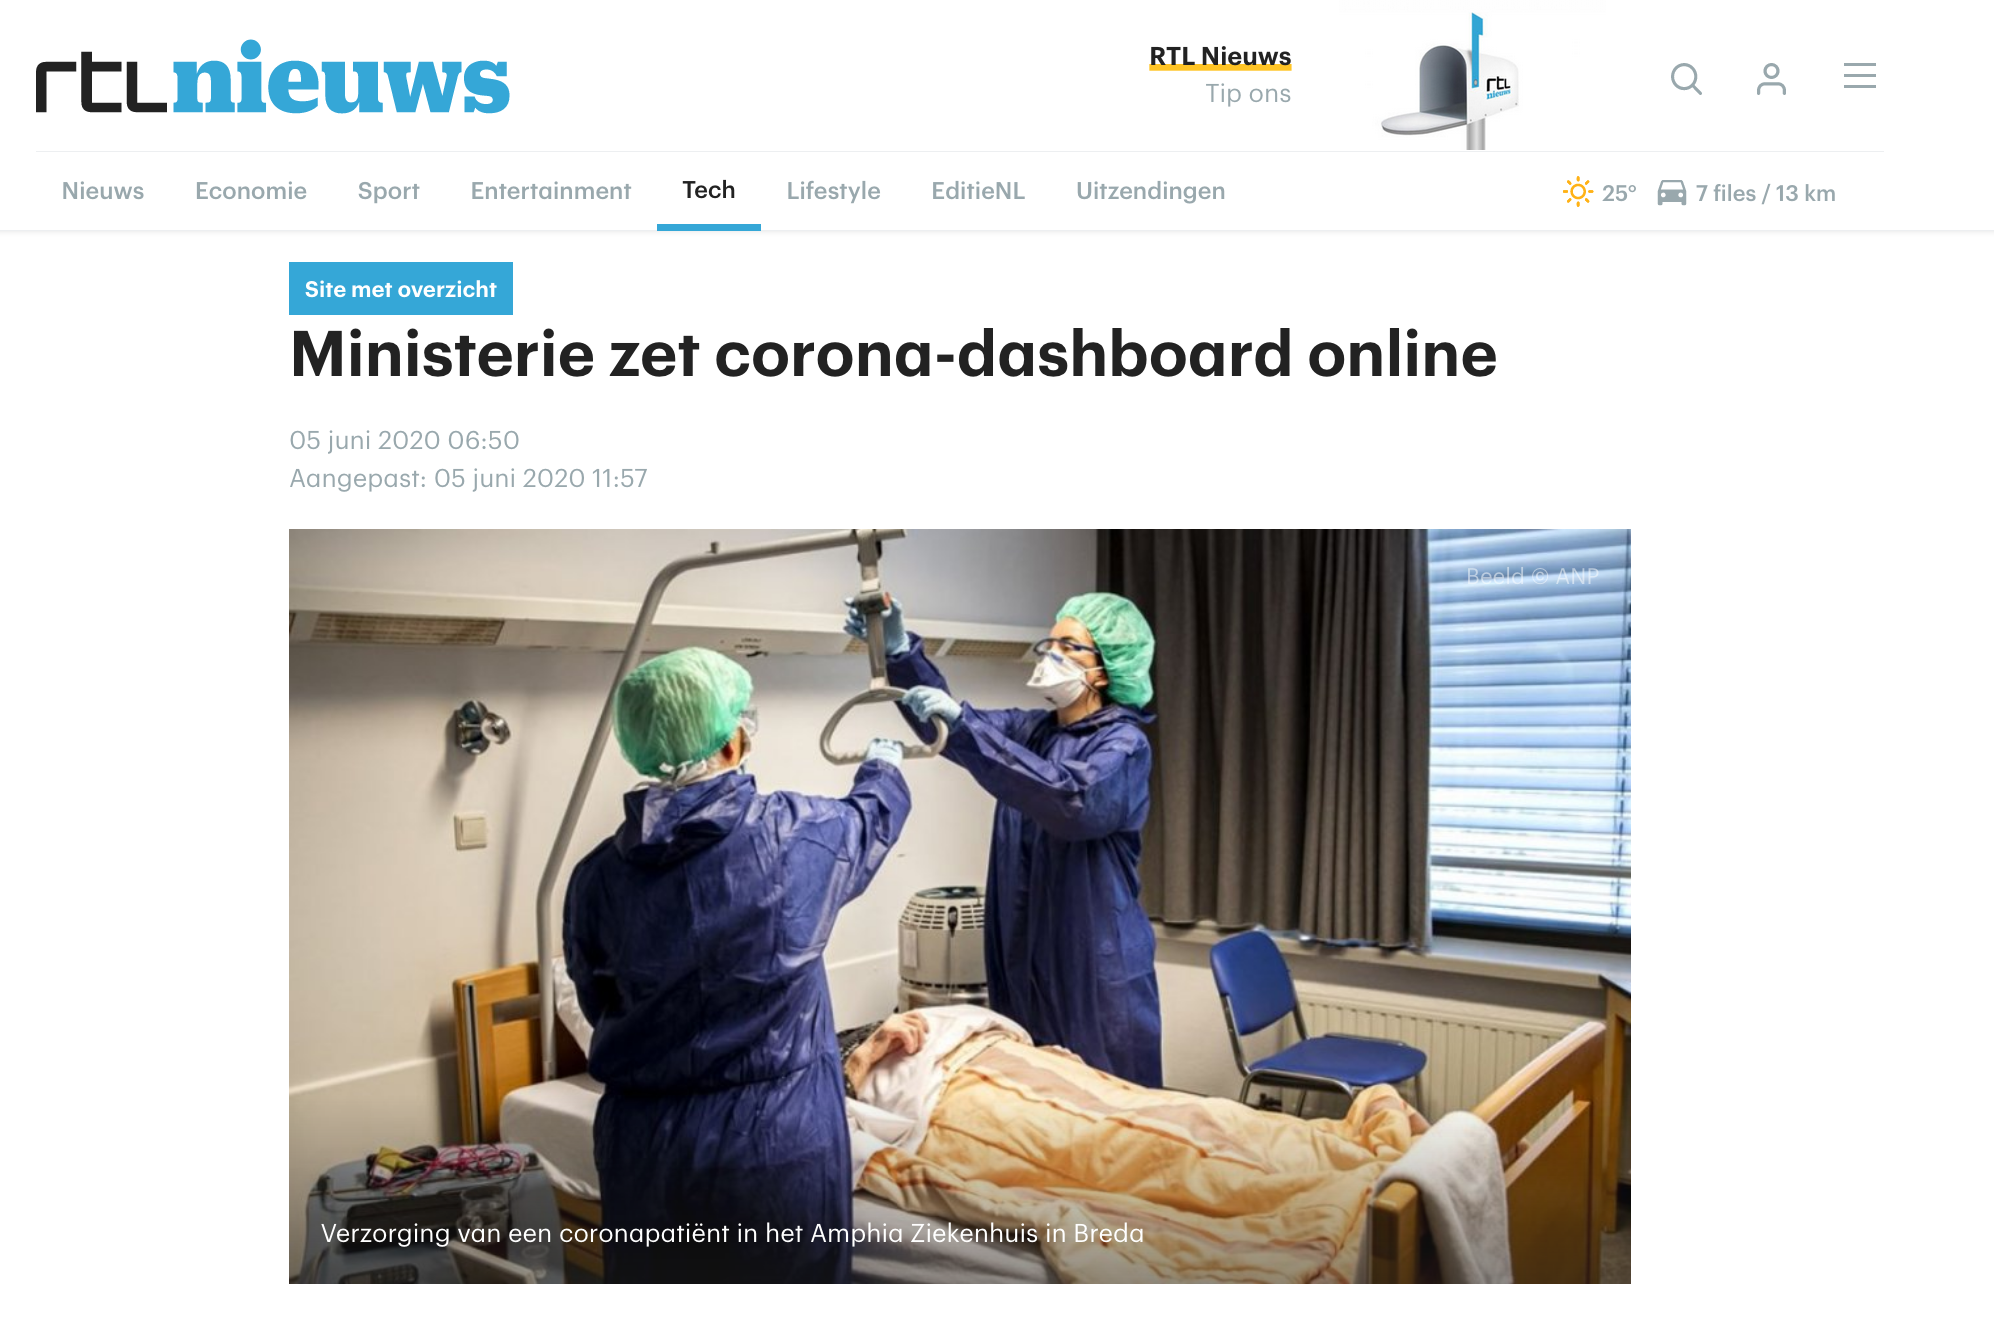 Image for RTL Nieuws publicity item